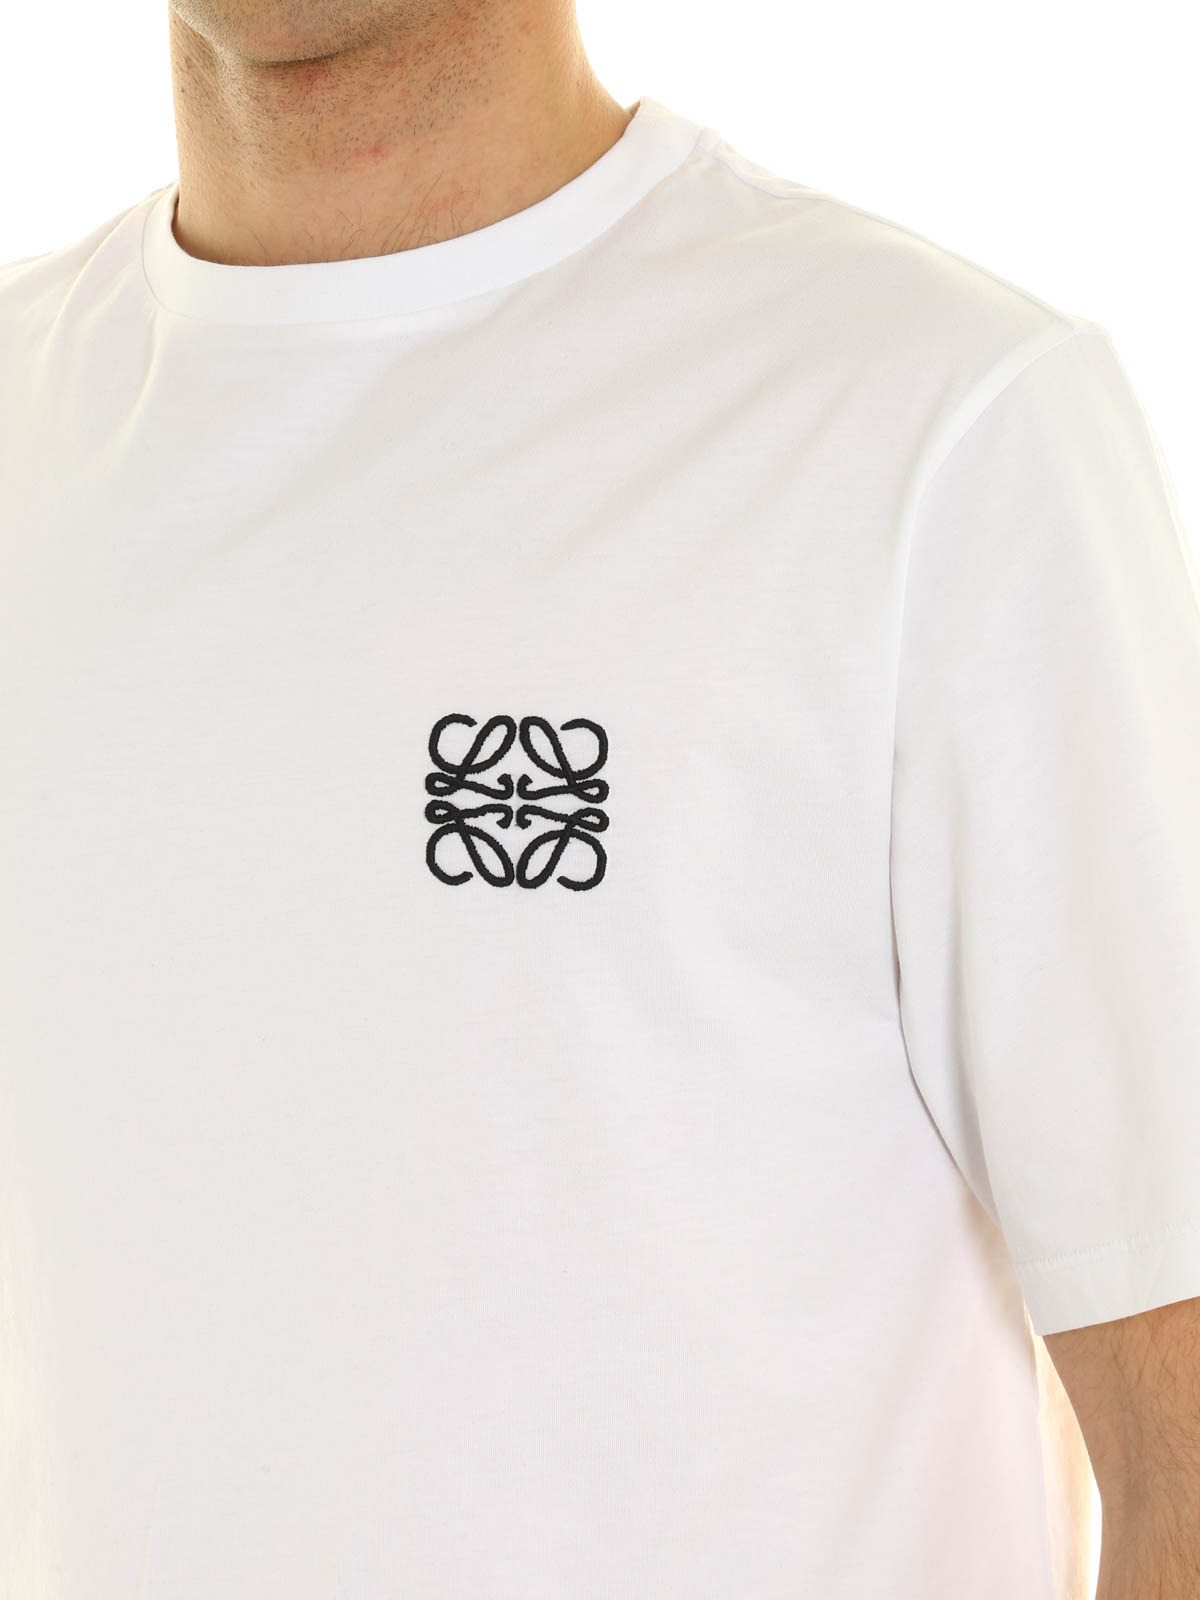 LOEWE - LOEWE ロエベ tシャツ アナグラム 刺繍ロゴの+spbgp44.ru